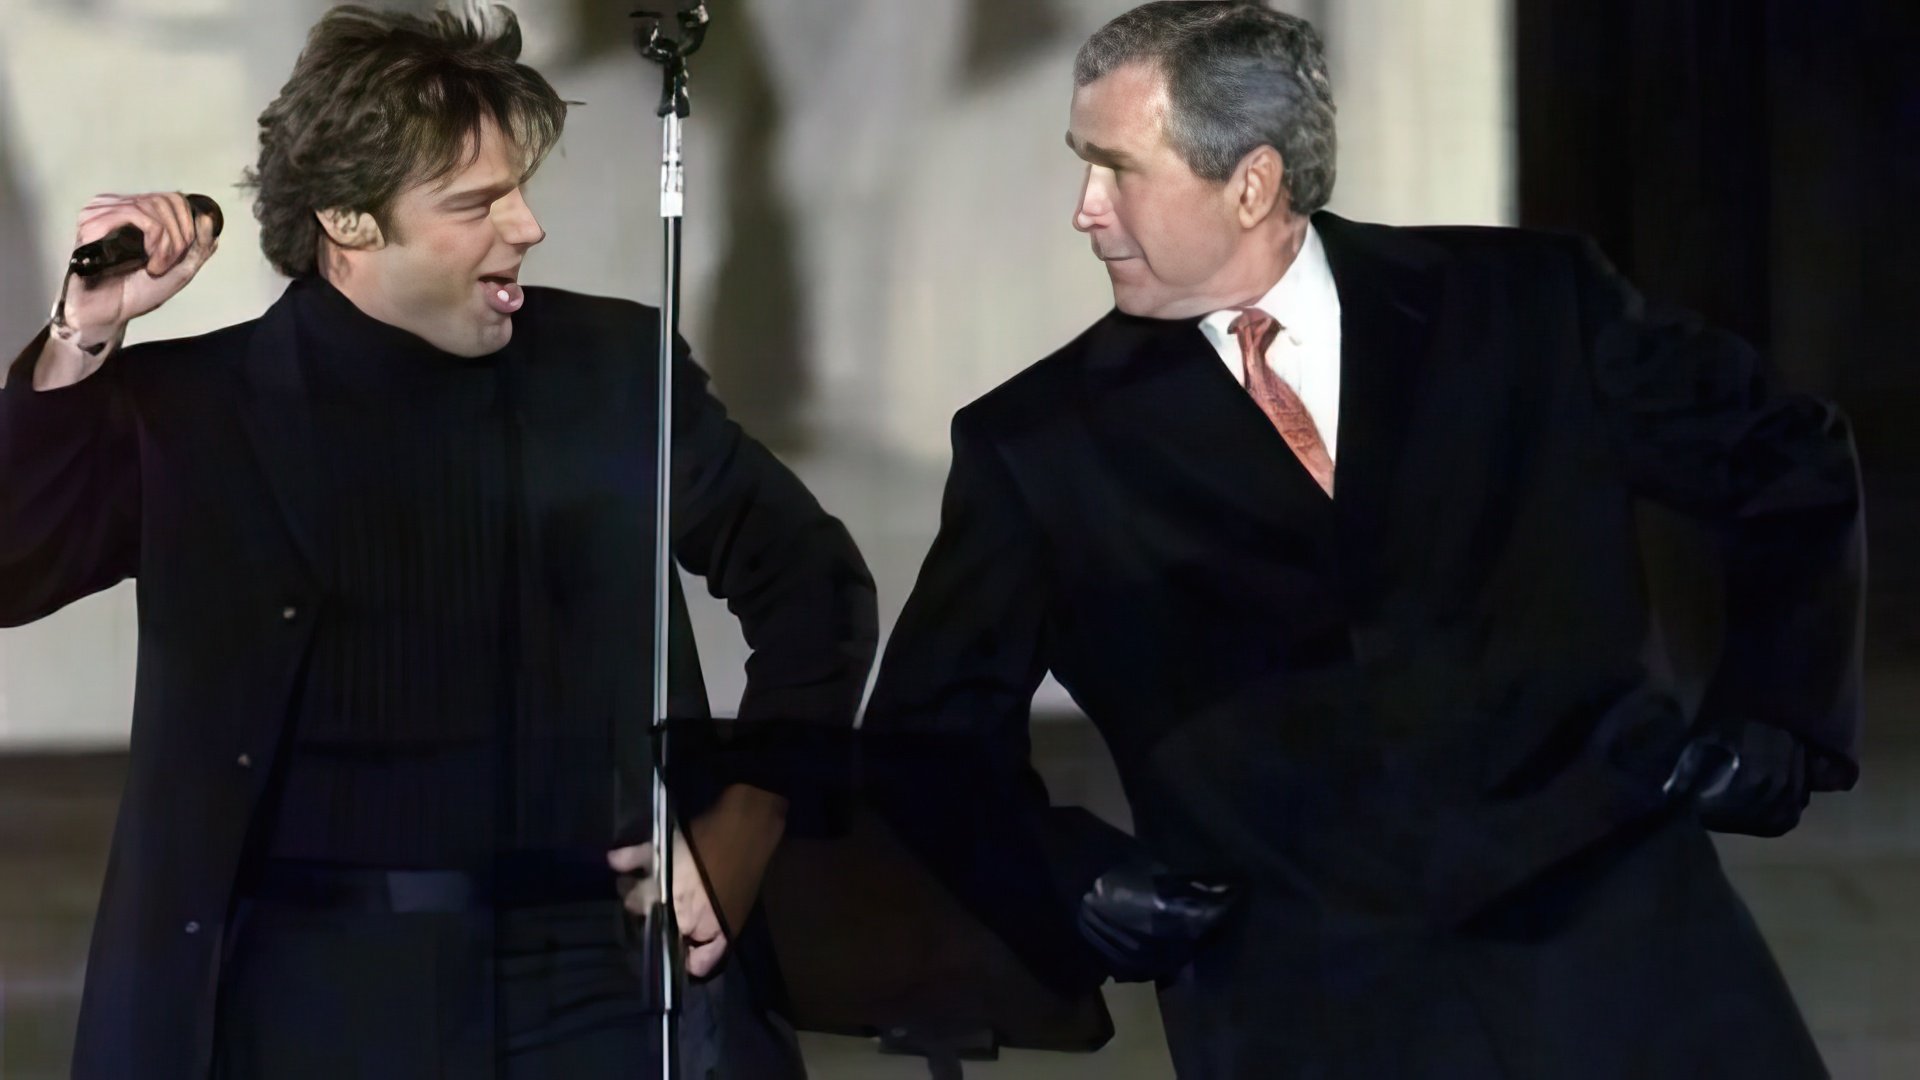 Ricky Martin danced with George Bush